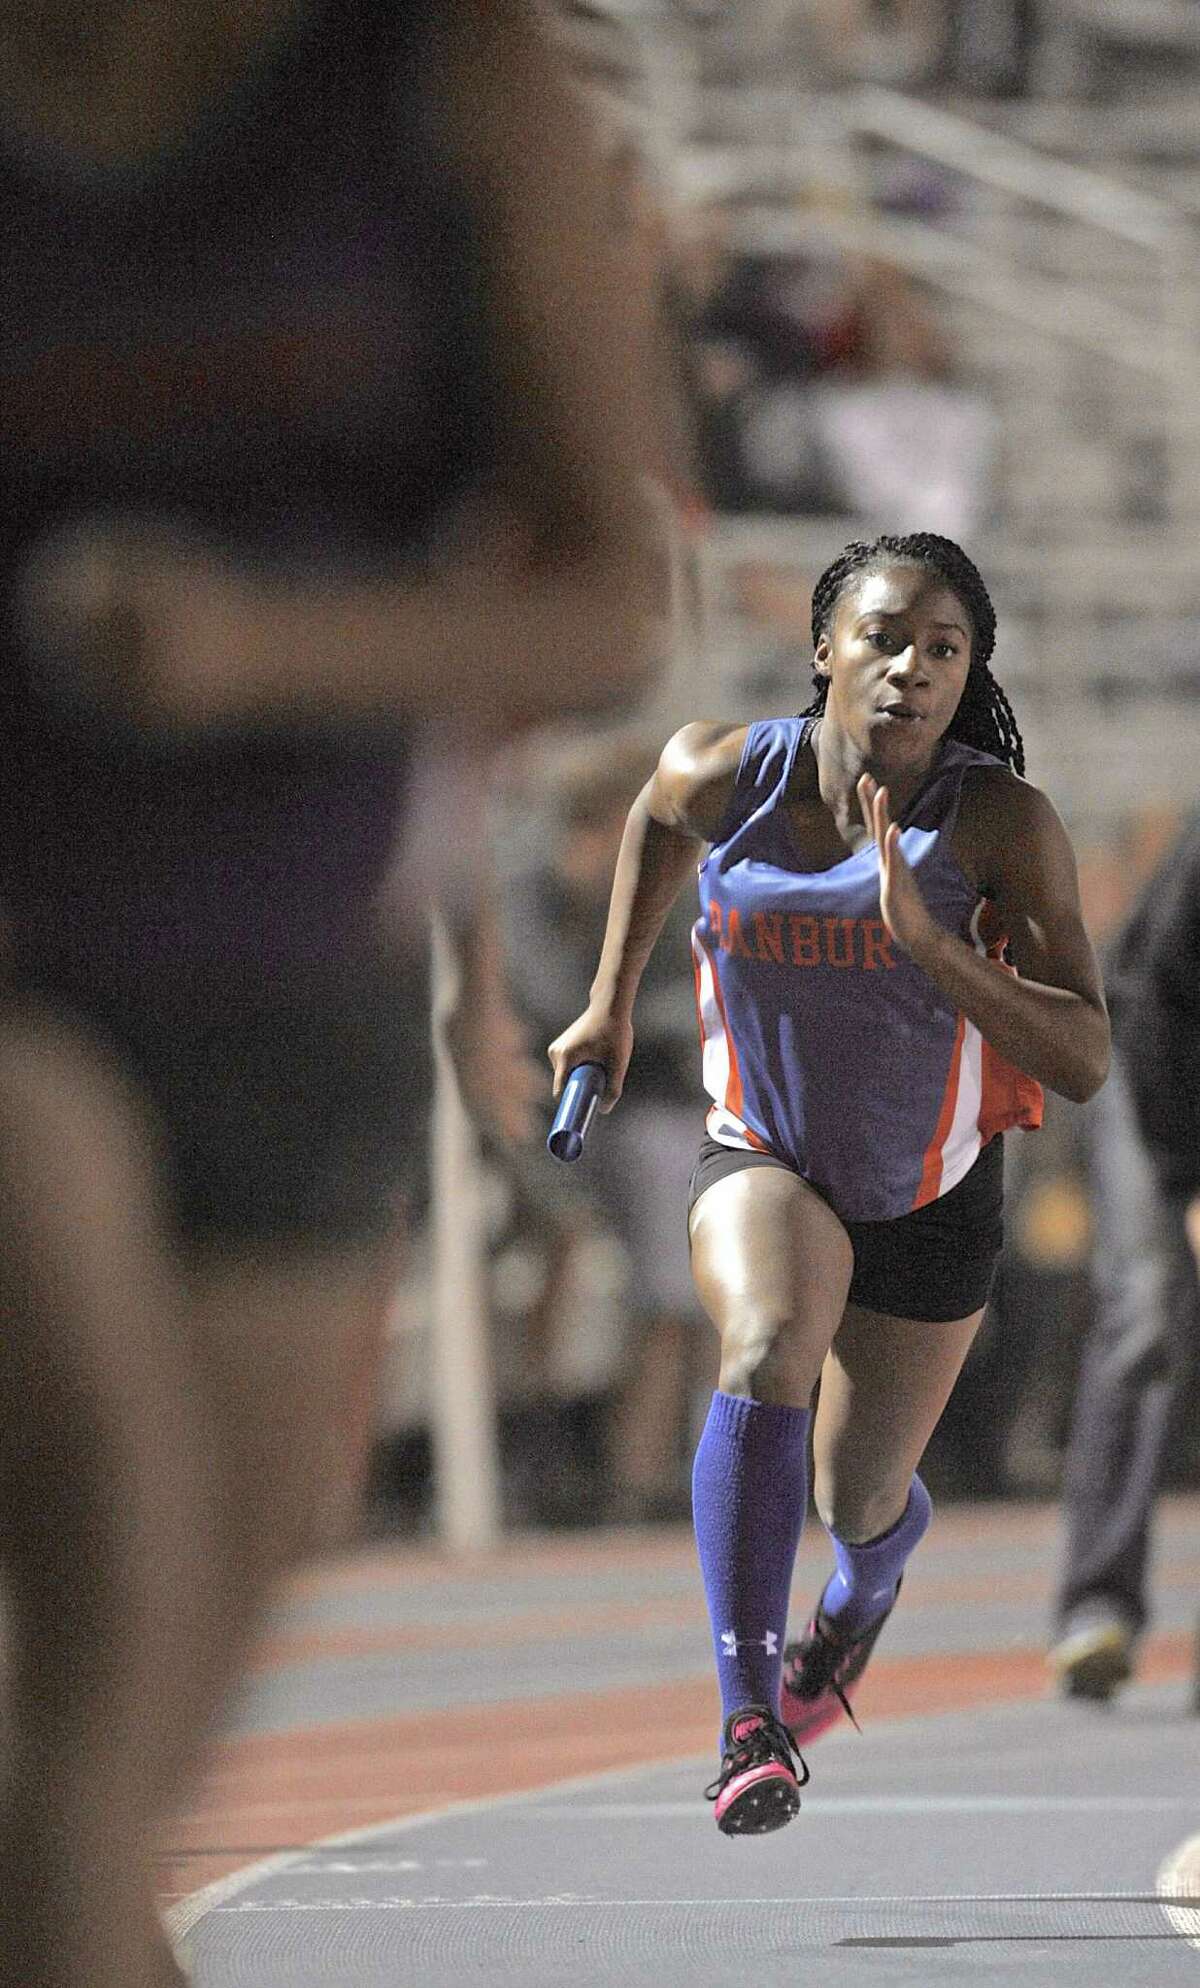 Zyniah Bunn, of Danbury High School, at the start of the girls 4x200 meter relay at the 2015 Dream Invitational track meet held at Danbury High School, on Friday night, May 15, 2015, in Danbury, Conn.